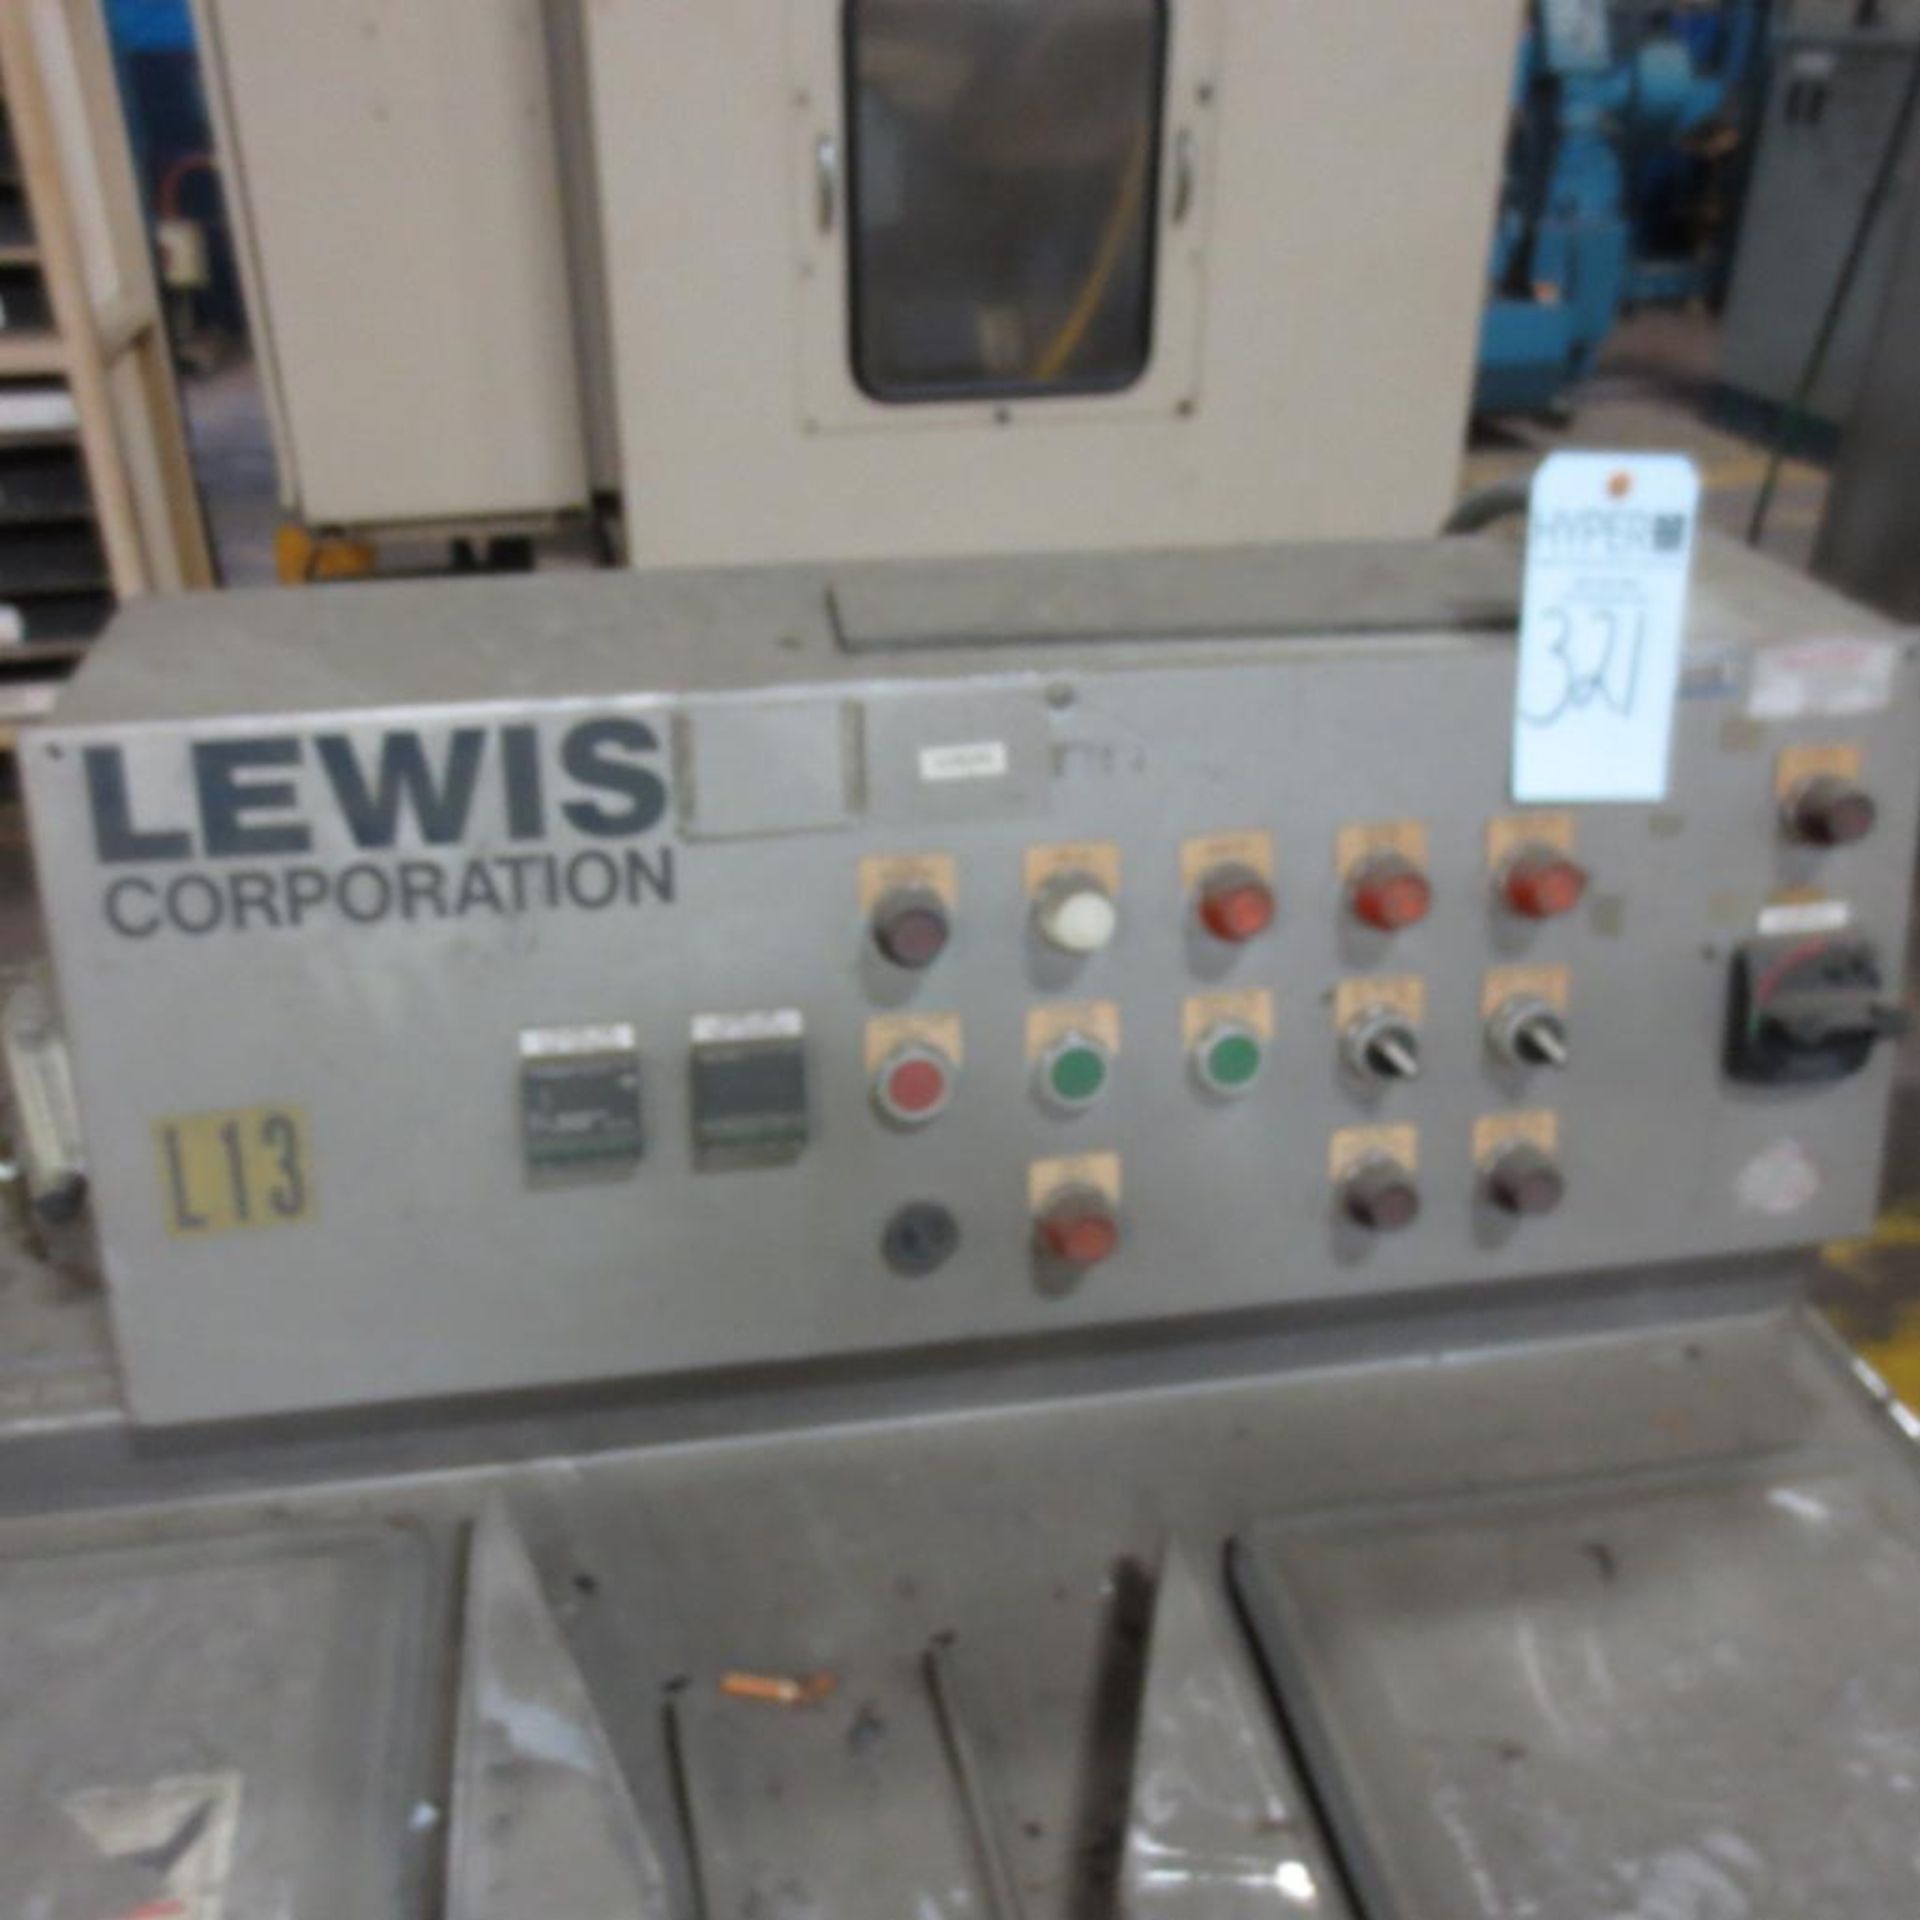 Lewis Ultrasonic Cleaner. Loading Fee is $50.00 - Image 2 of 2